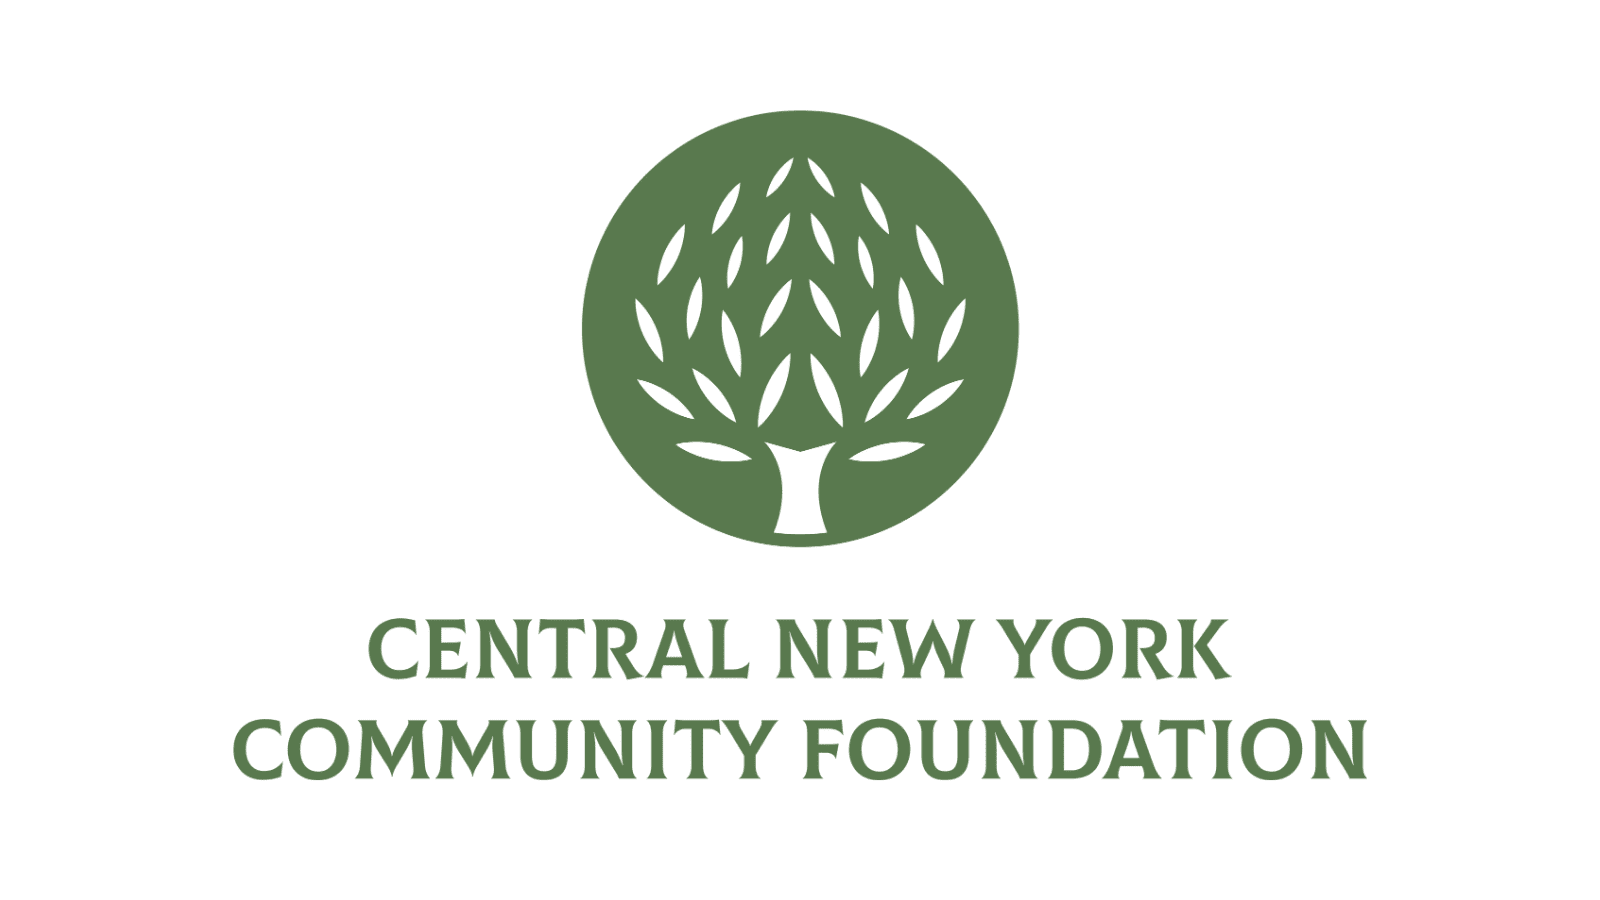 Central New York Community Foundation